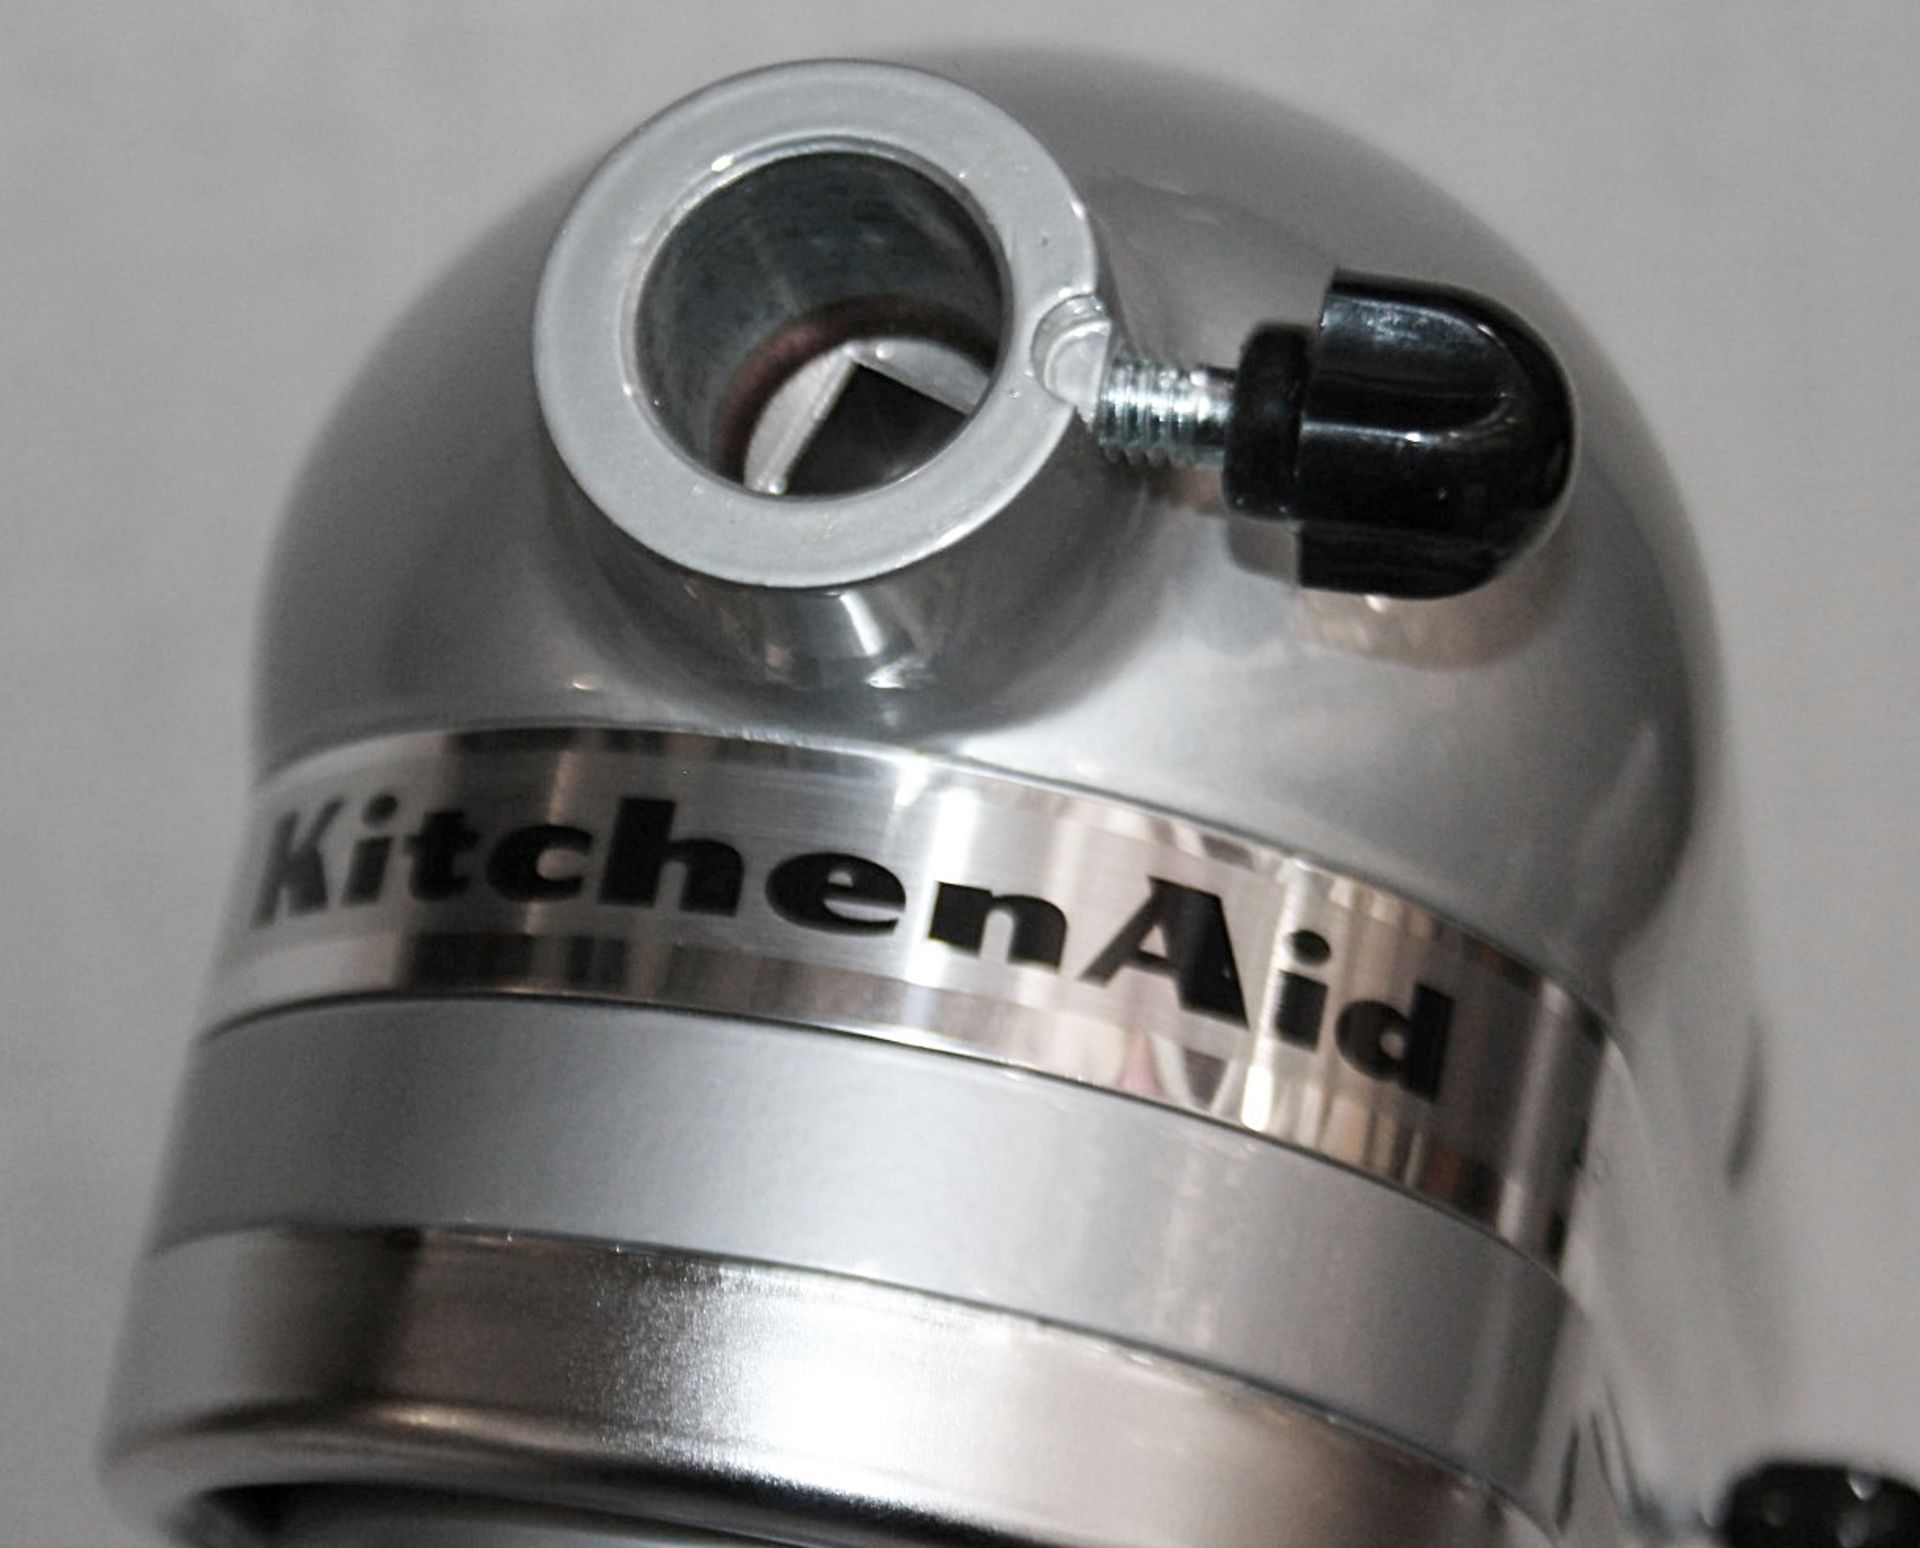 1 x KITCHENAID Artisan Tilt-Head Stand Mixer (4.8L) Original Price £549.00 - Unused Boxed Stock - Image 9 of 11